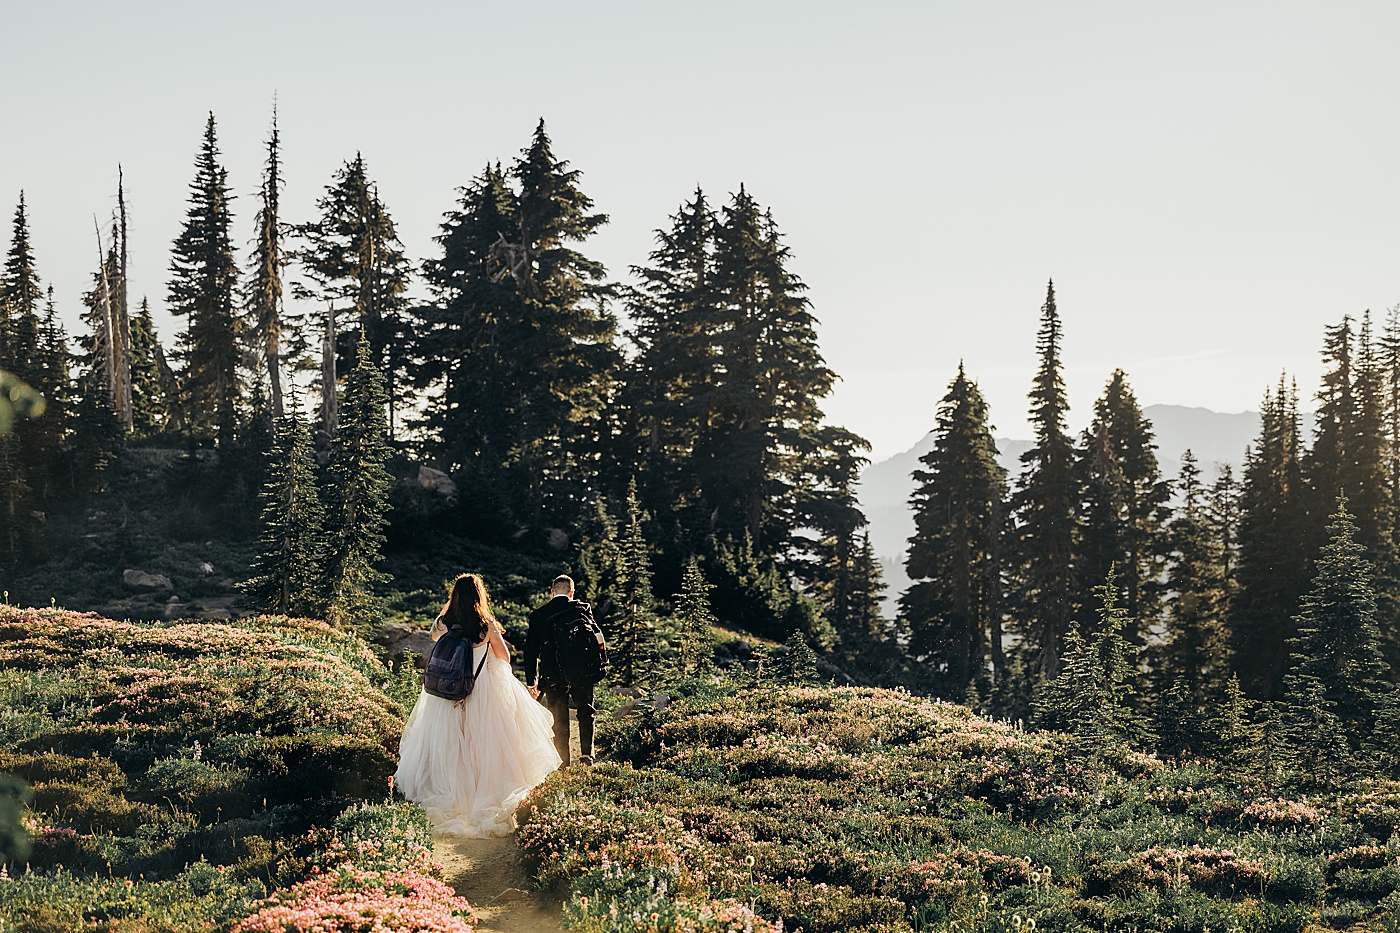 Bride and groom hiking Skyline Trail loop | Photo by Megan Montalvo Photography